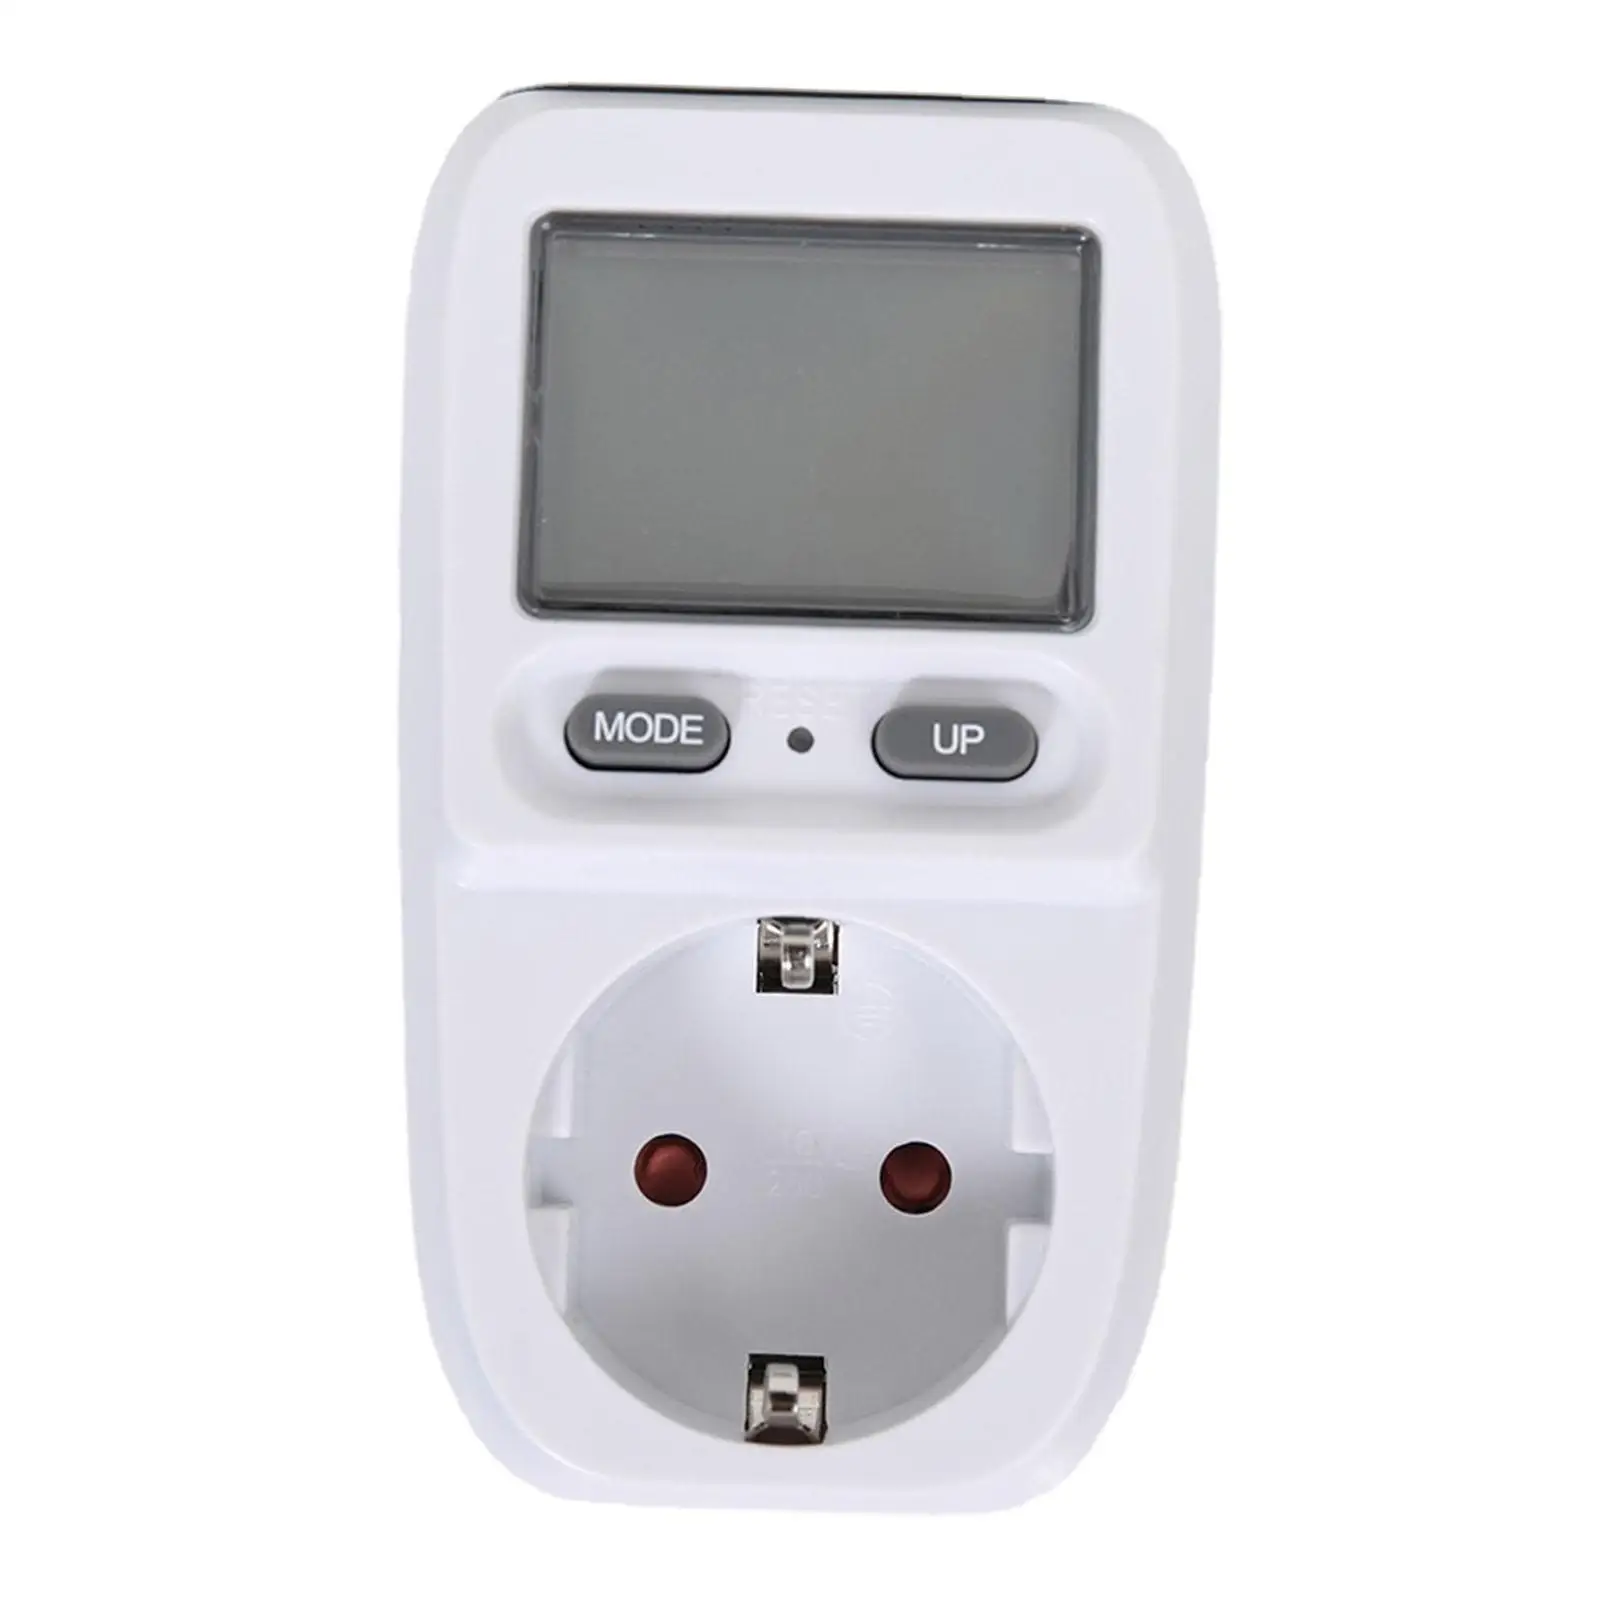 Monitor Power Backlit Watt Meter Wattmeter Digital Equipment Tester Low Cost Electricity Meter Monitor for Household 230V/16A